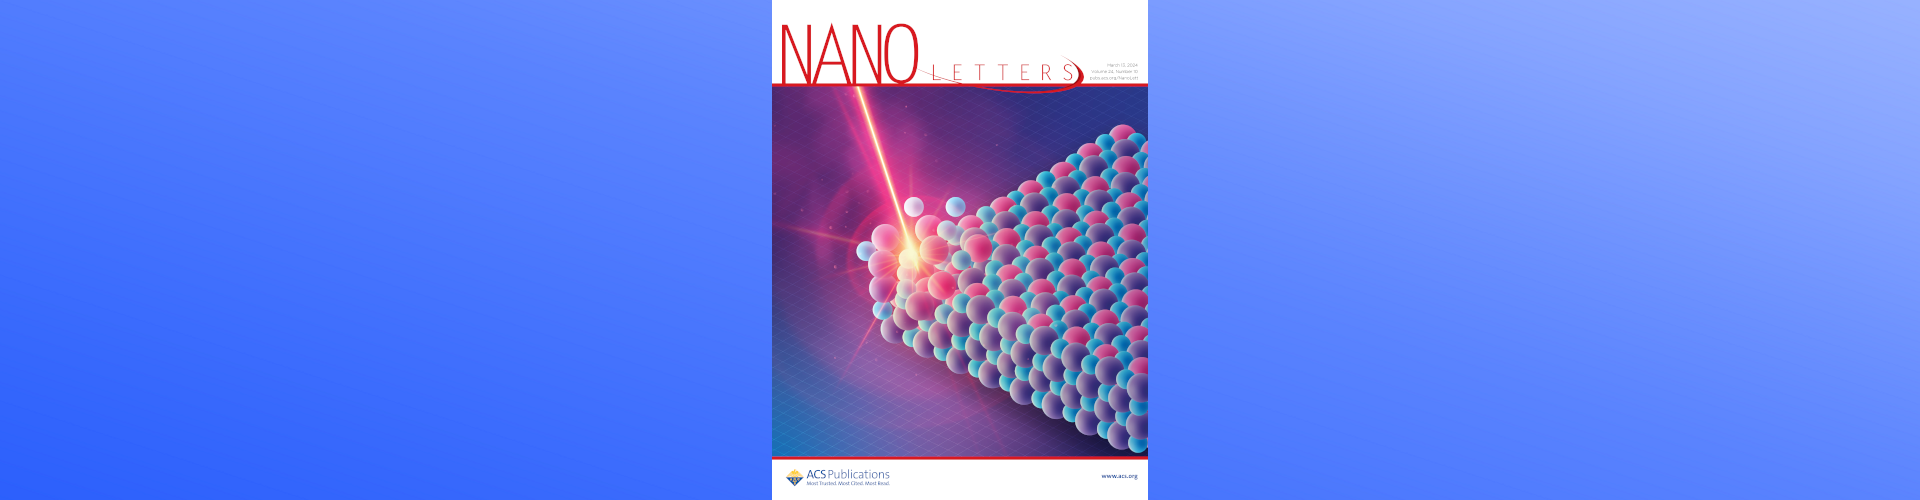 Pós-doutor do IFGW publica estudo computacional que foi destaque de capa principal da revista Nano Letters